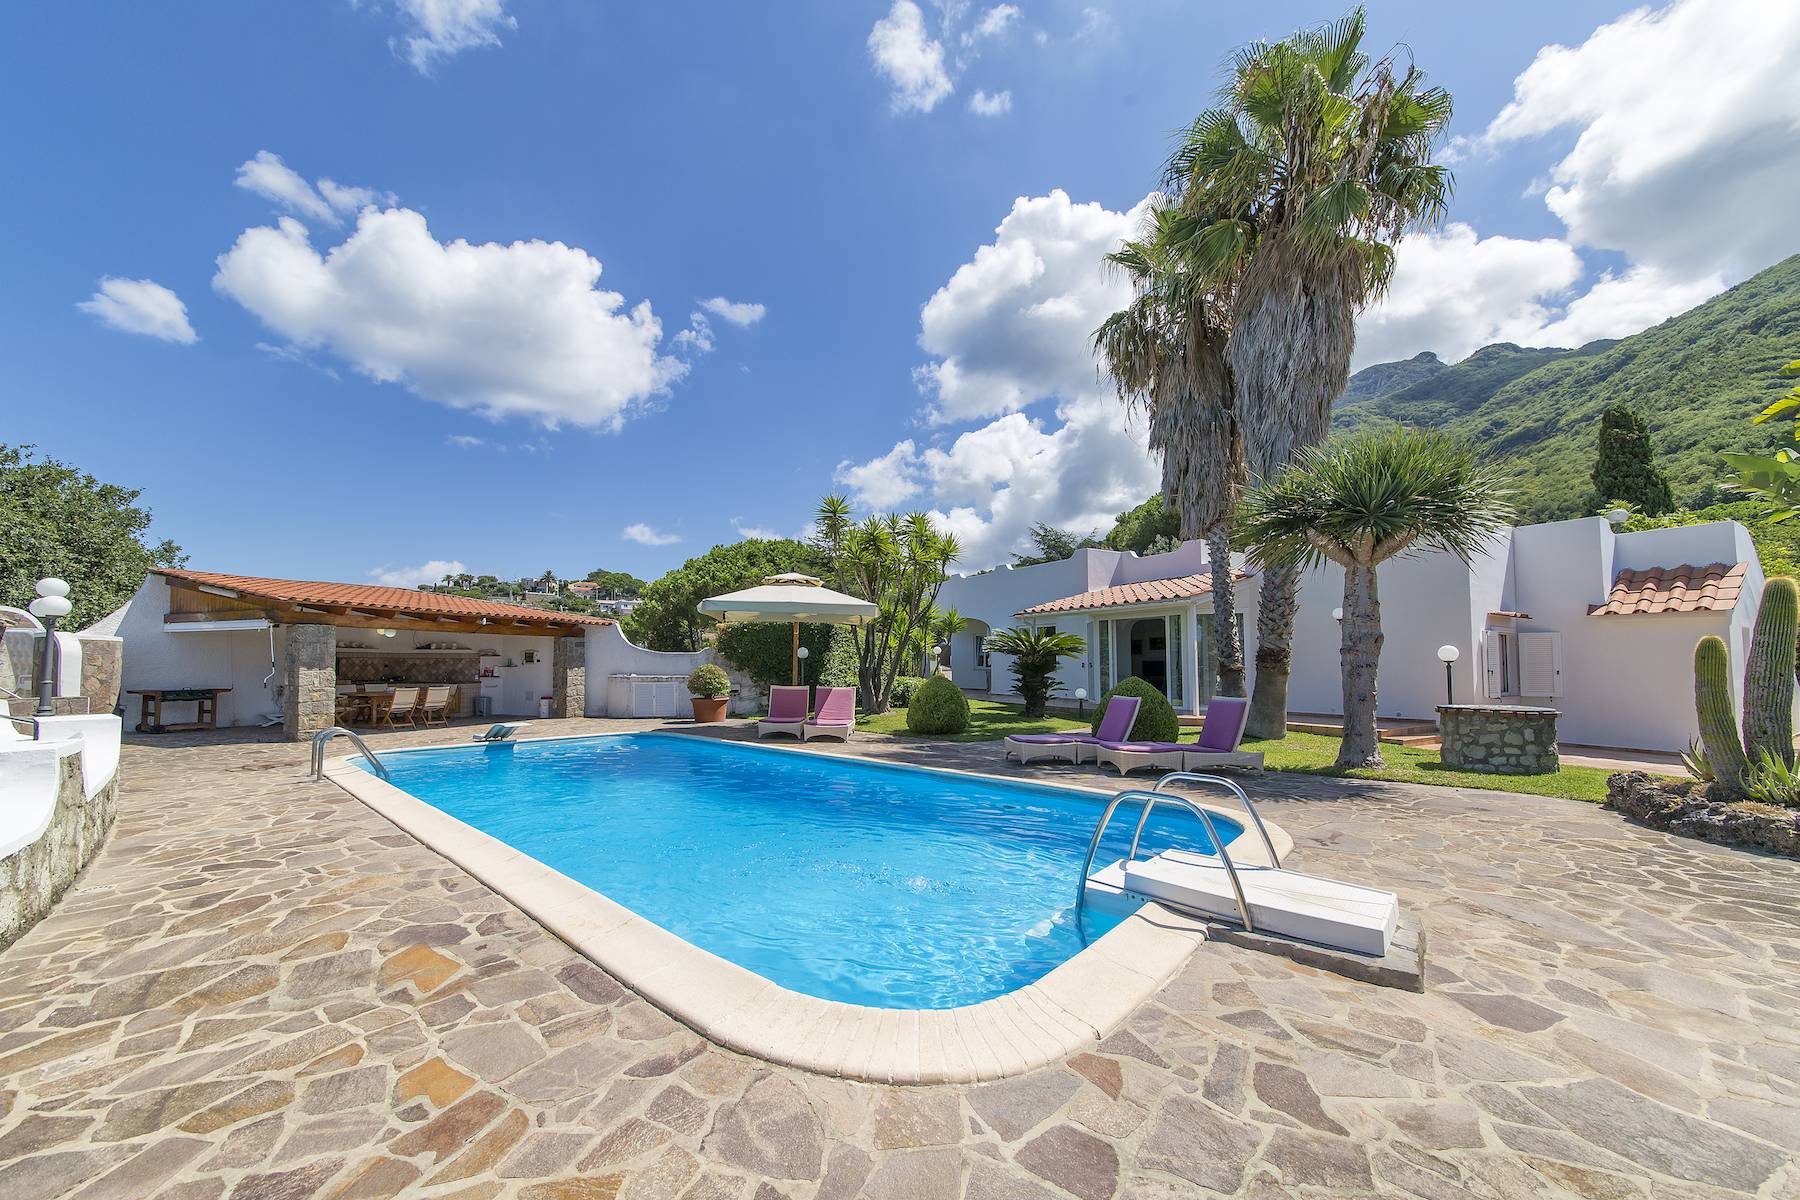 Wonderful villa with swimming pool in Ischia